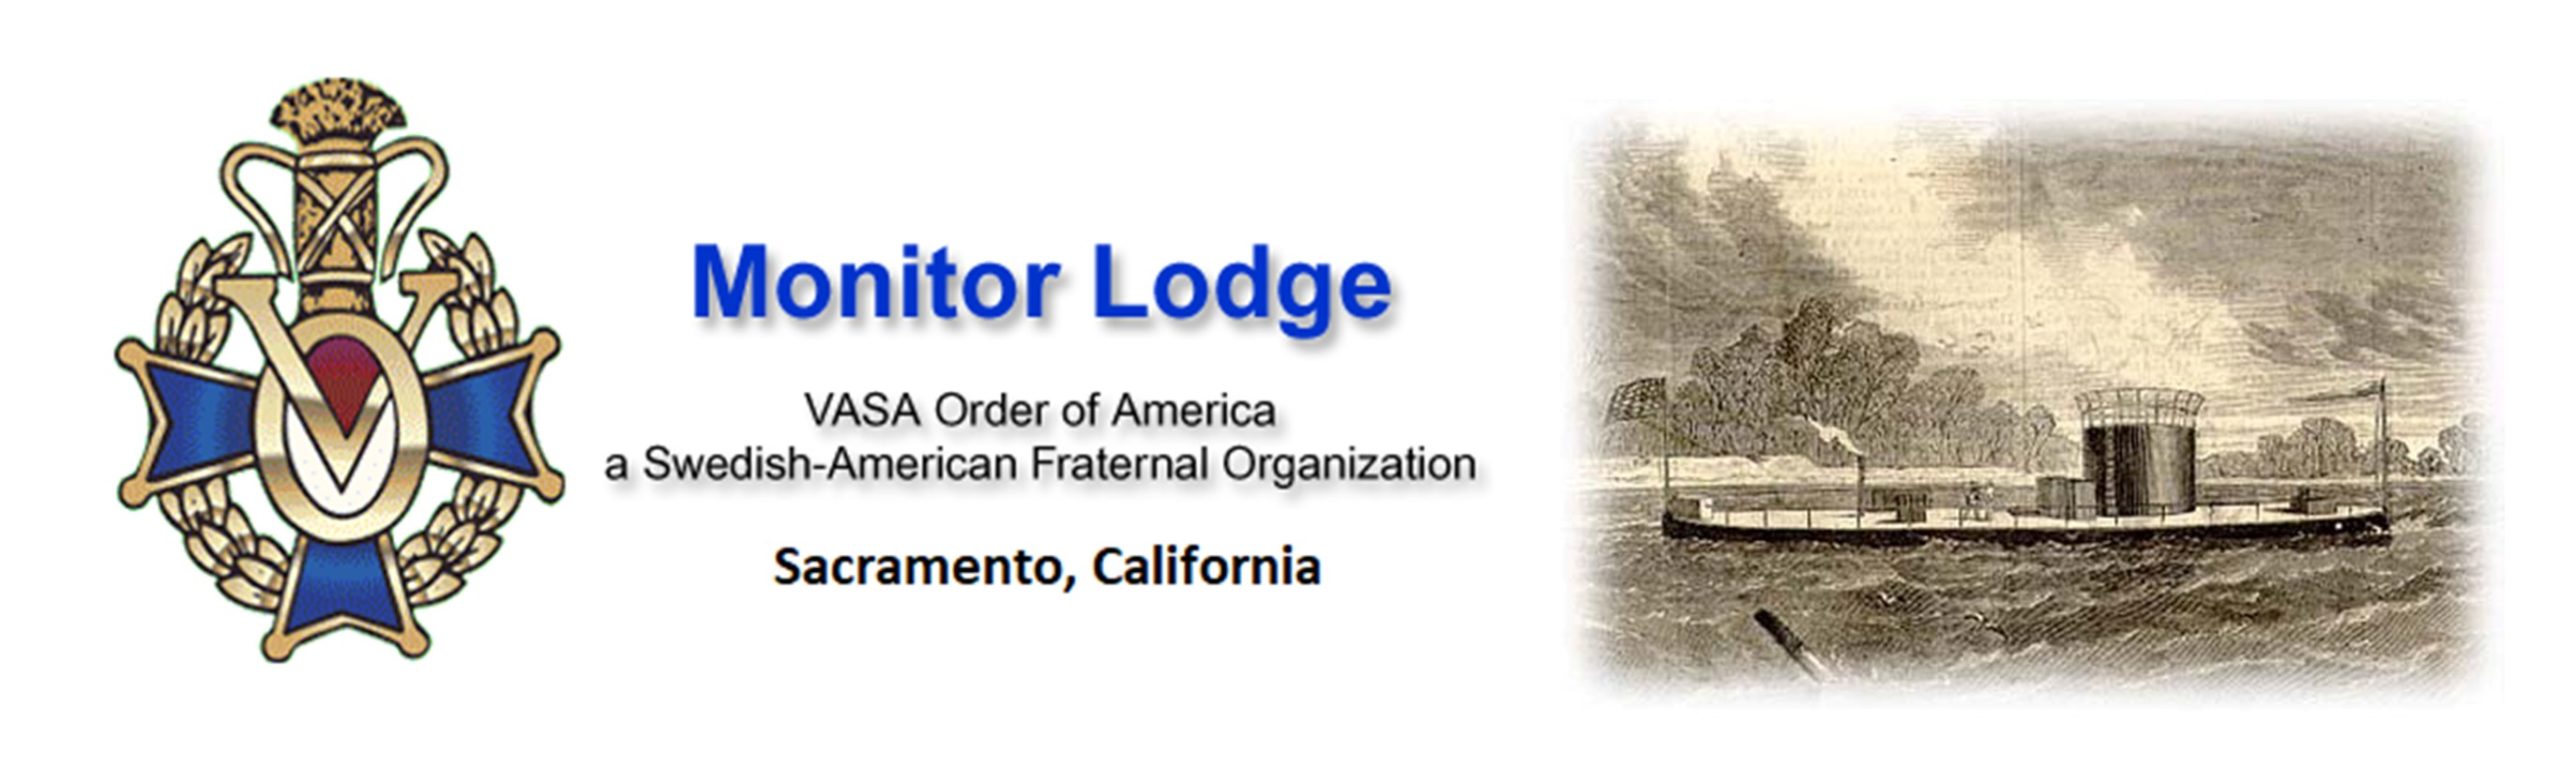 Monitor Lodge Sacramento